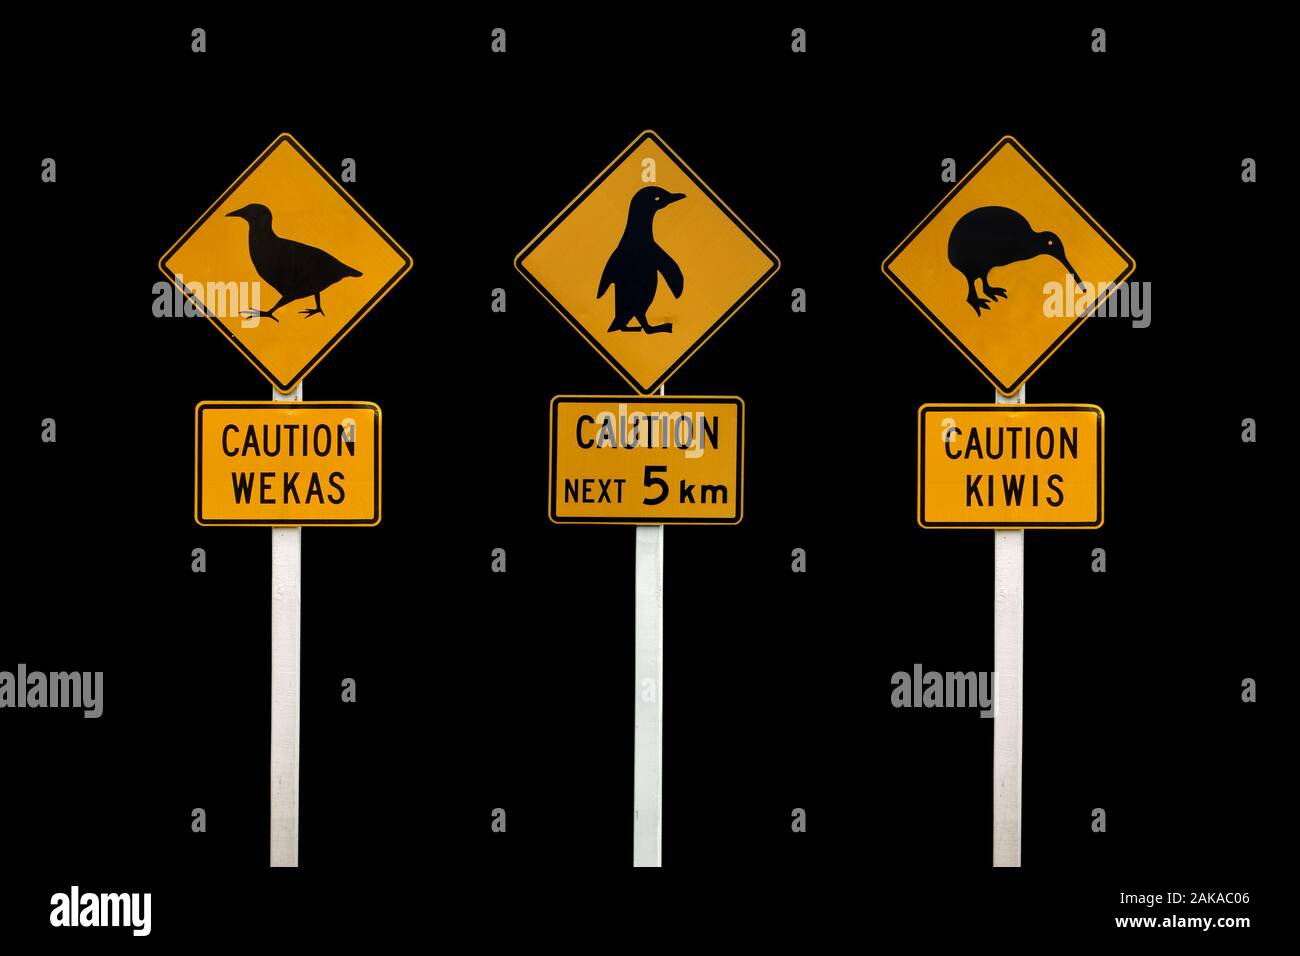 New Zealand road signs on black background. Caution kiwis, caution wekas, caution penguins Stock Photo